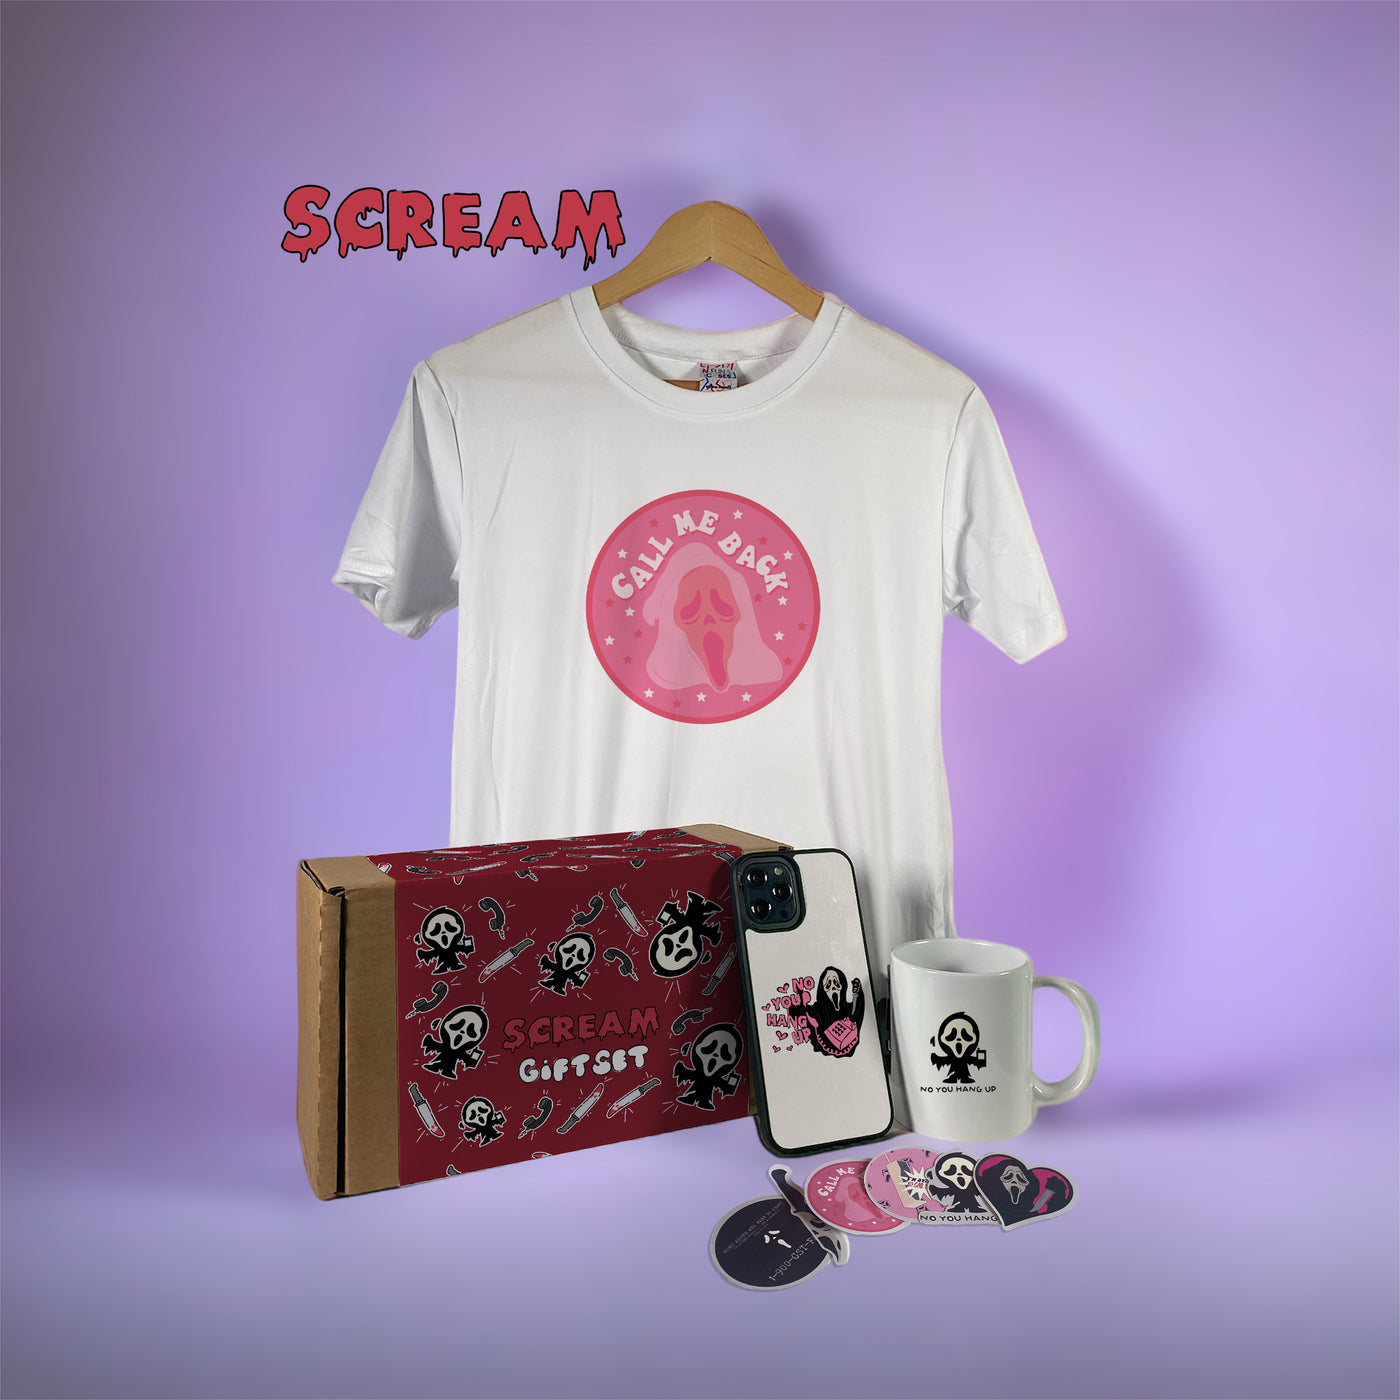 Scream Gift Set